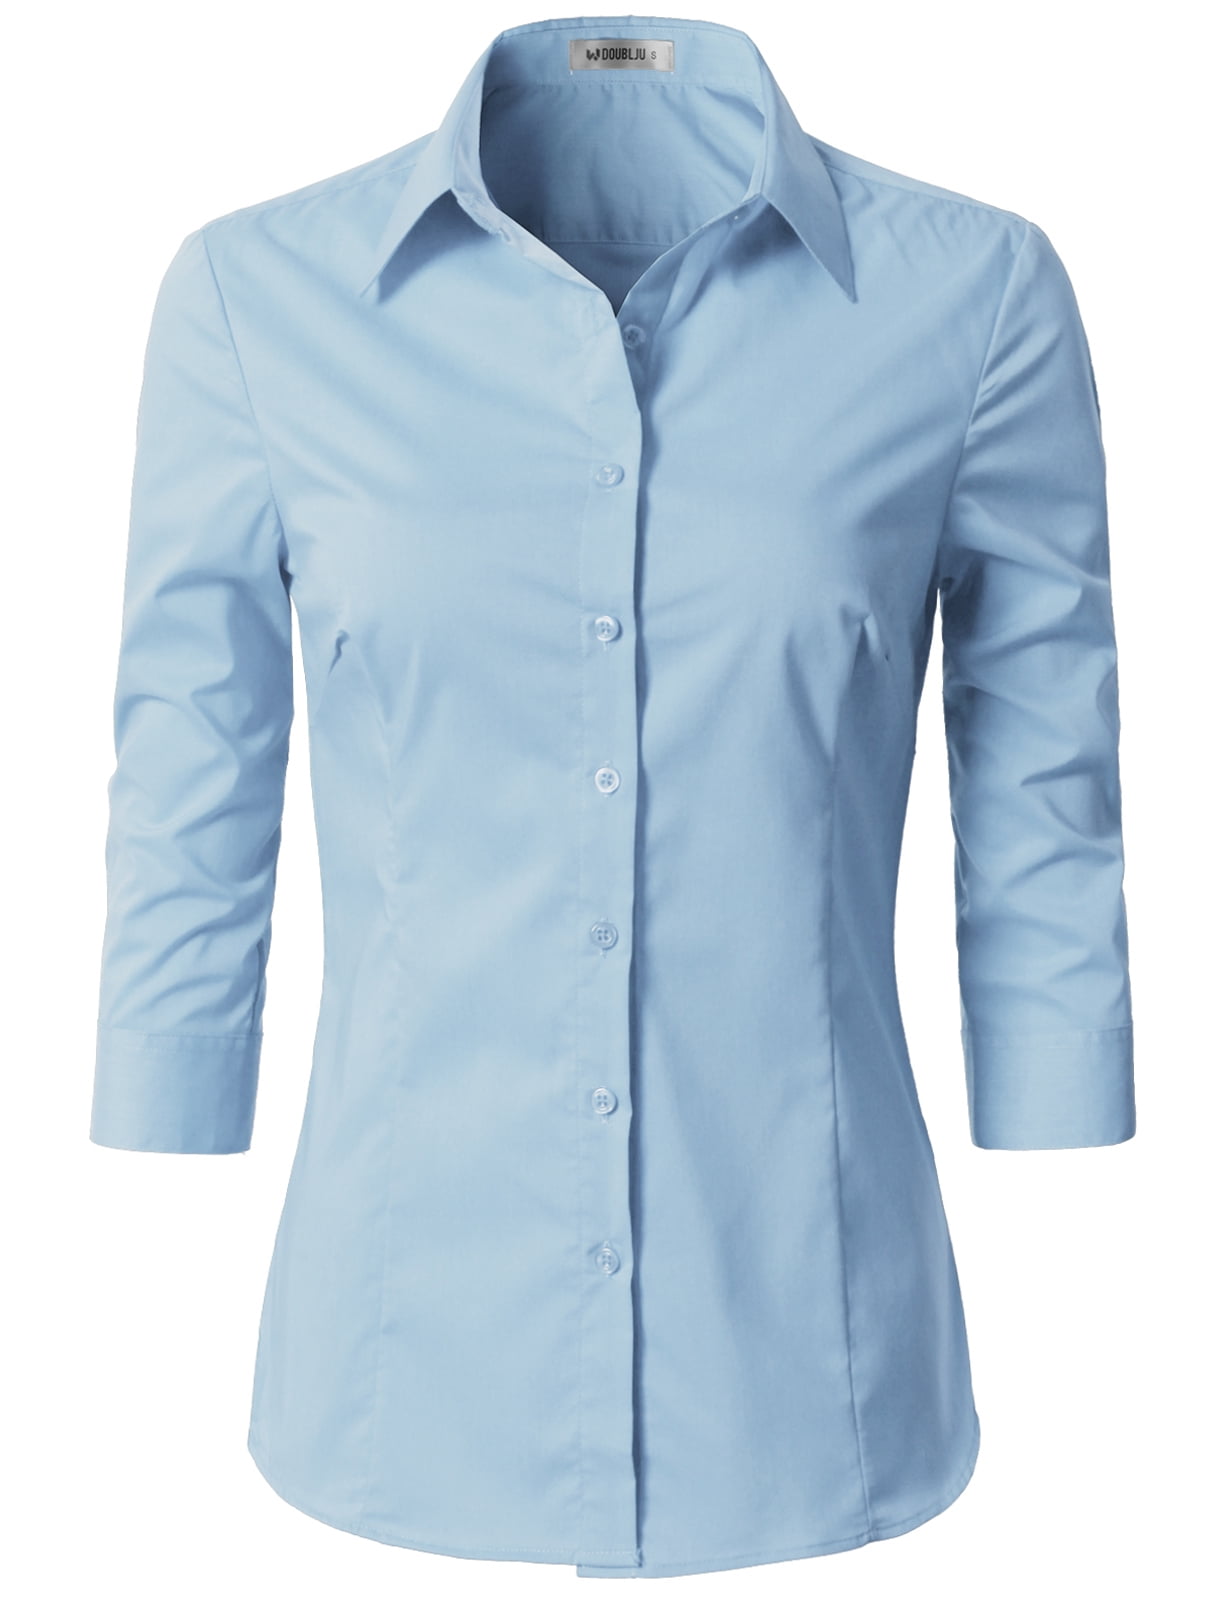 Womens Button-Down Shirts - Walmart.com